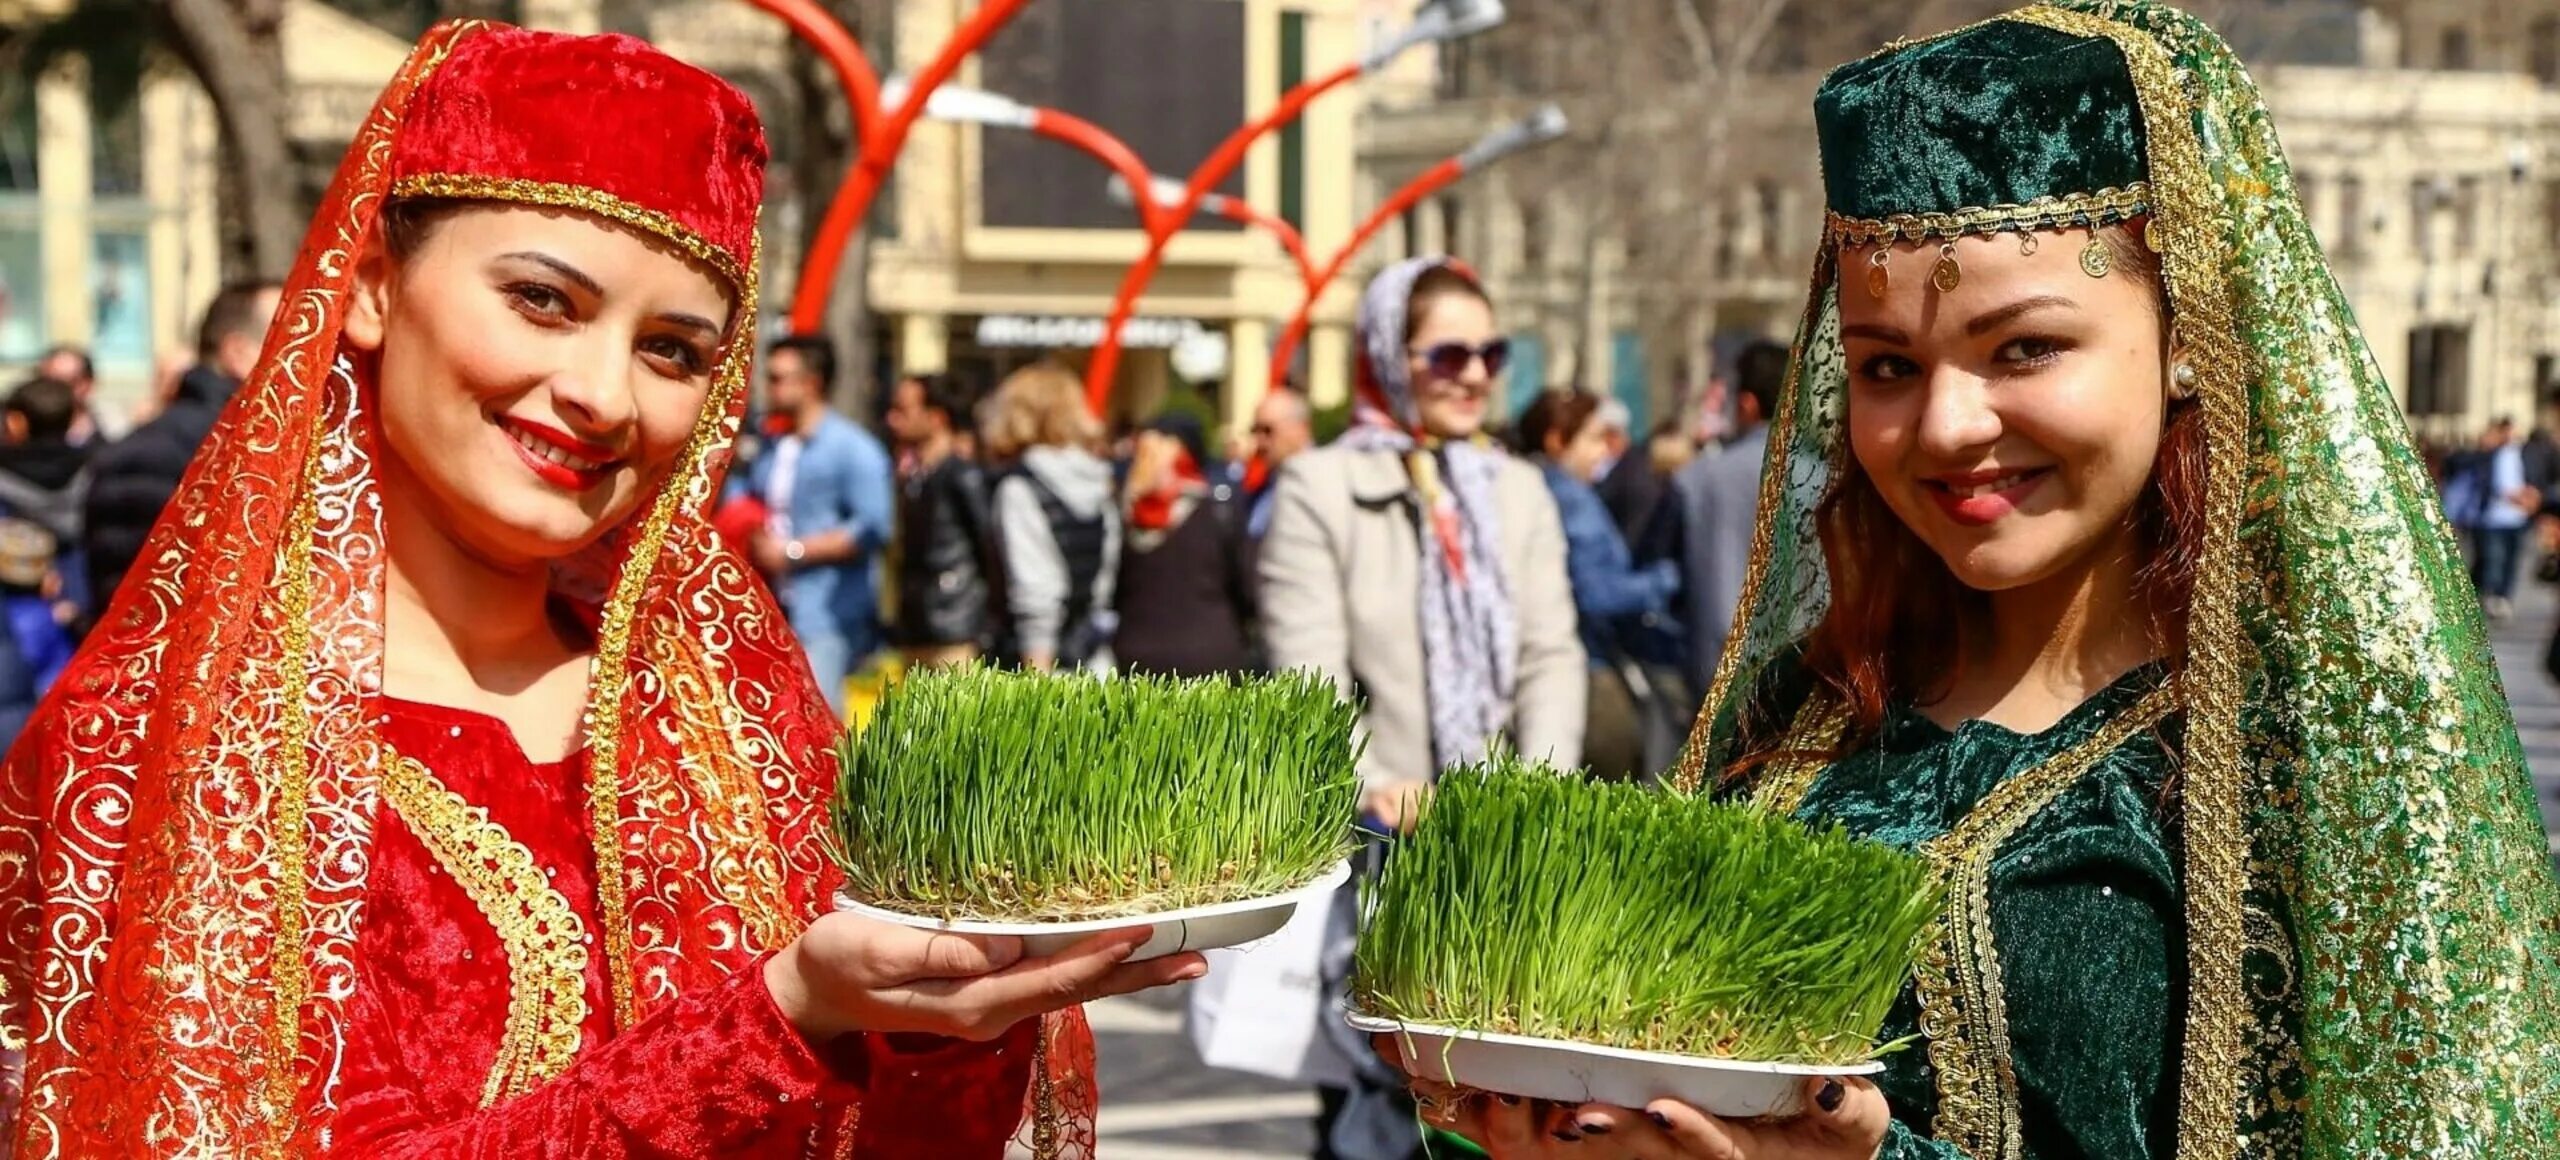 Новруз в Азербайджане. Азербайджанский праздник весны. Ярмарка Навруз. Сладости на Новруз. Праздник у азербайджанцев сегодня